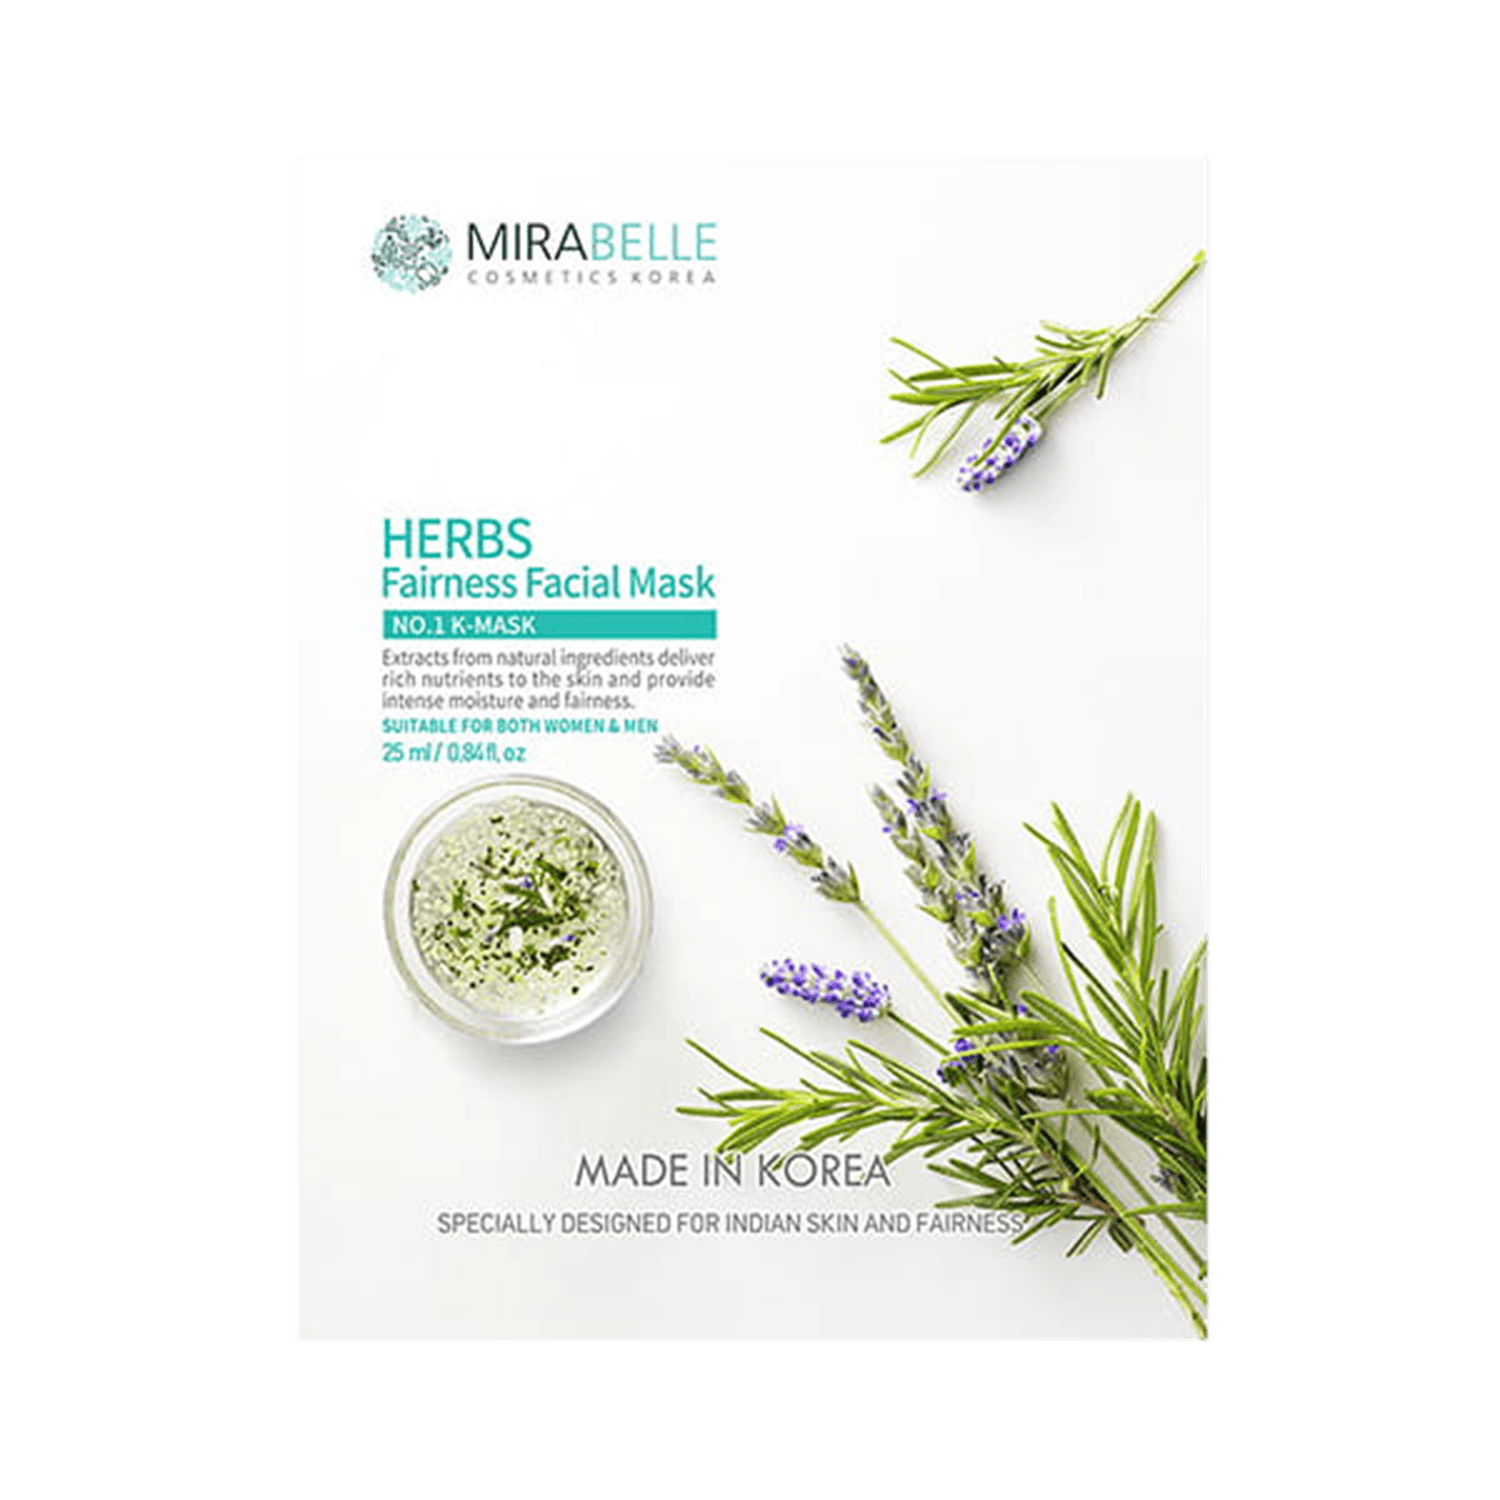 Mirabelle Cosmetics Korea | Mirabelle Cosmetics Korea Herbs Fairness Facial Mask (25ml)